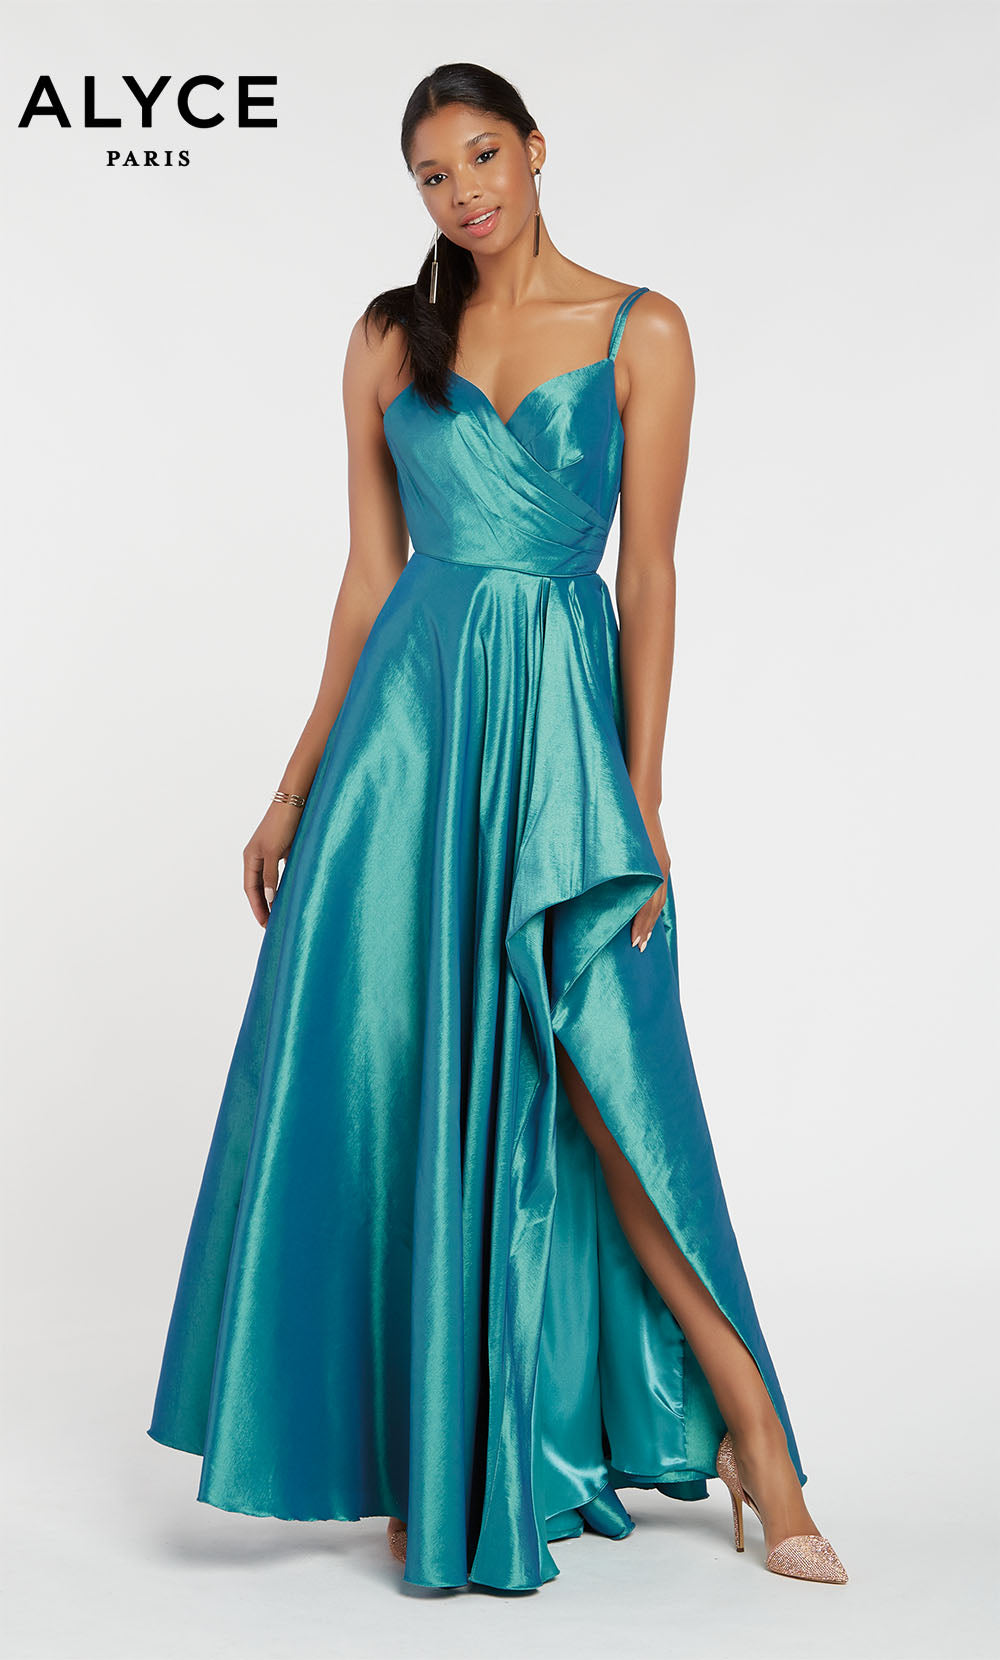 Plum high low prom dress with a sweetheart neckline, pockets, and a stretch taffeta fabrication. SWATCH_60094__PLUM